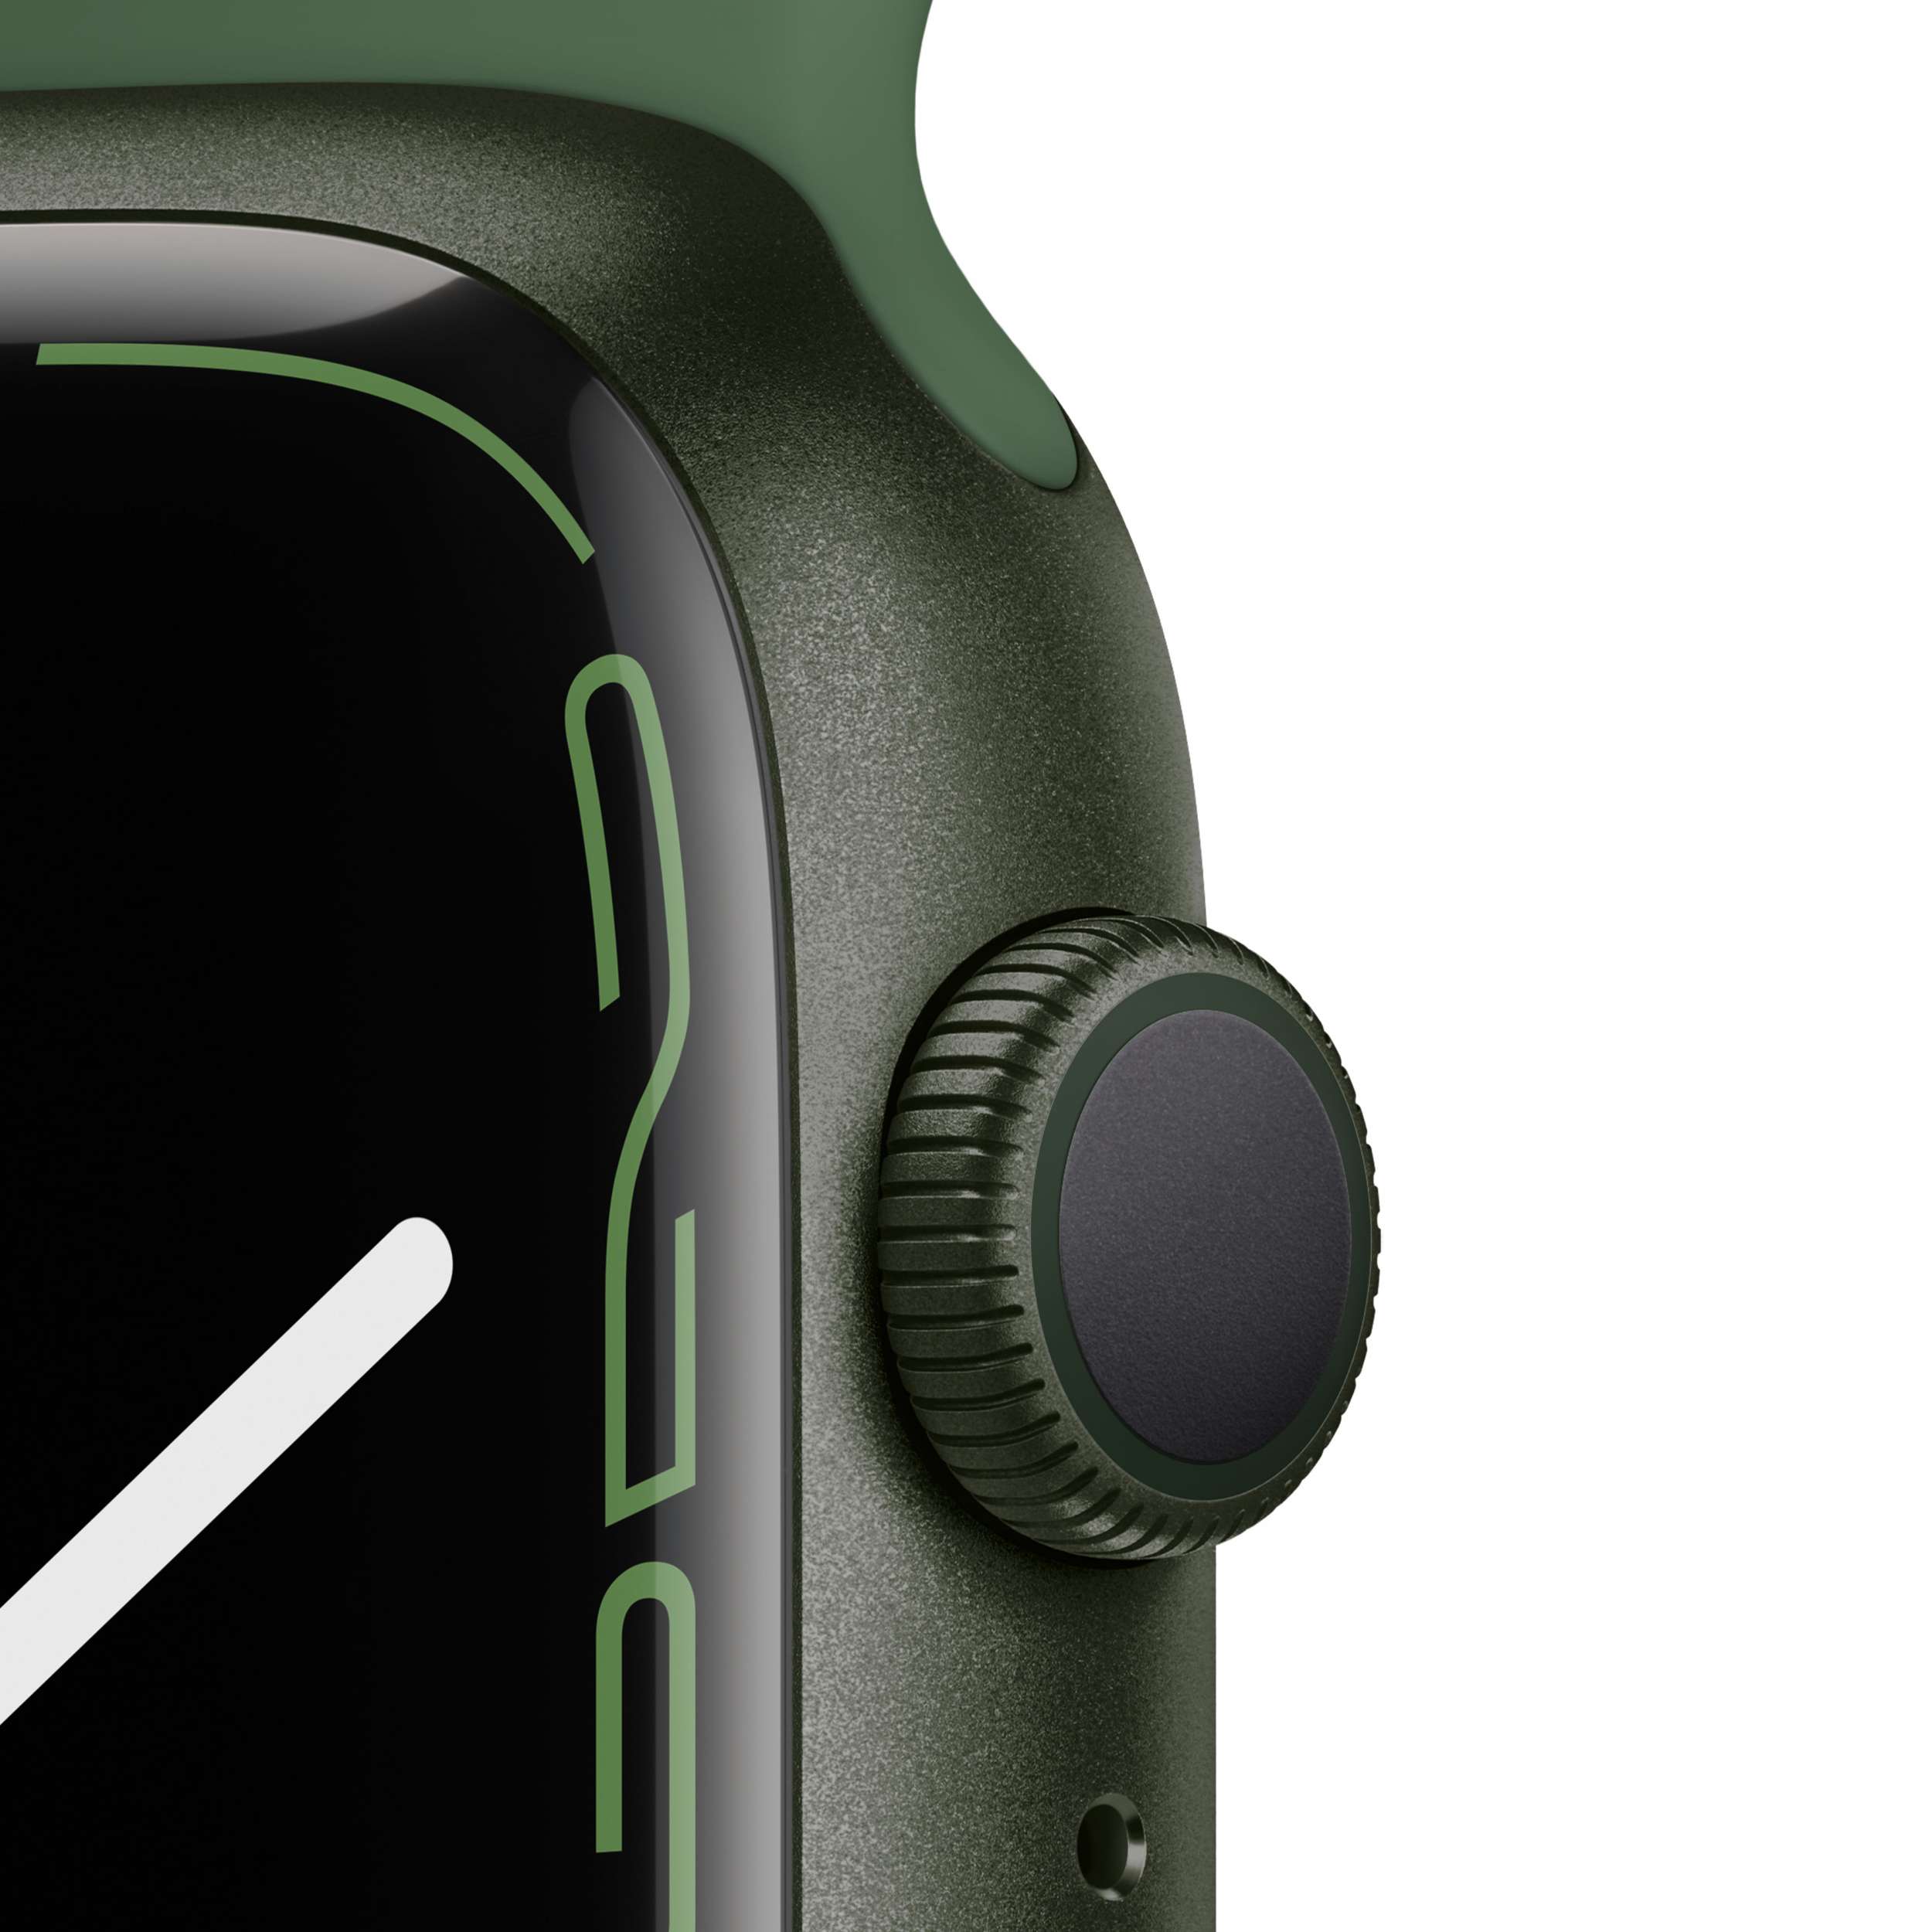 Apple Watch Series 7 GPS 45mm Yeşil Alüminyum Kasa - Yonca Spor Kordon MKN73TU/A